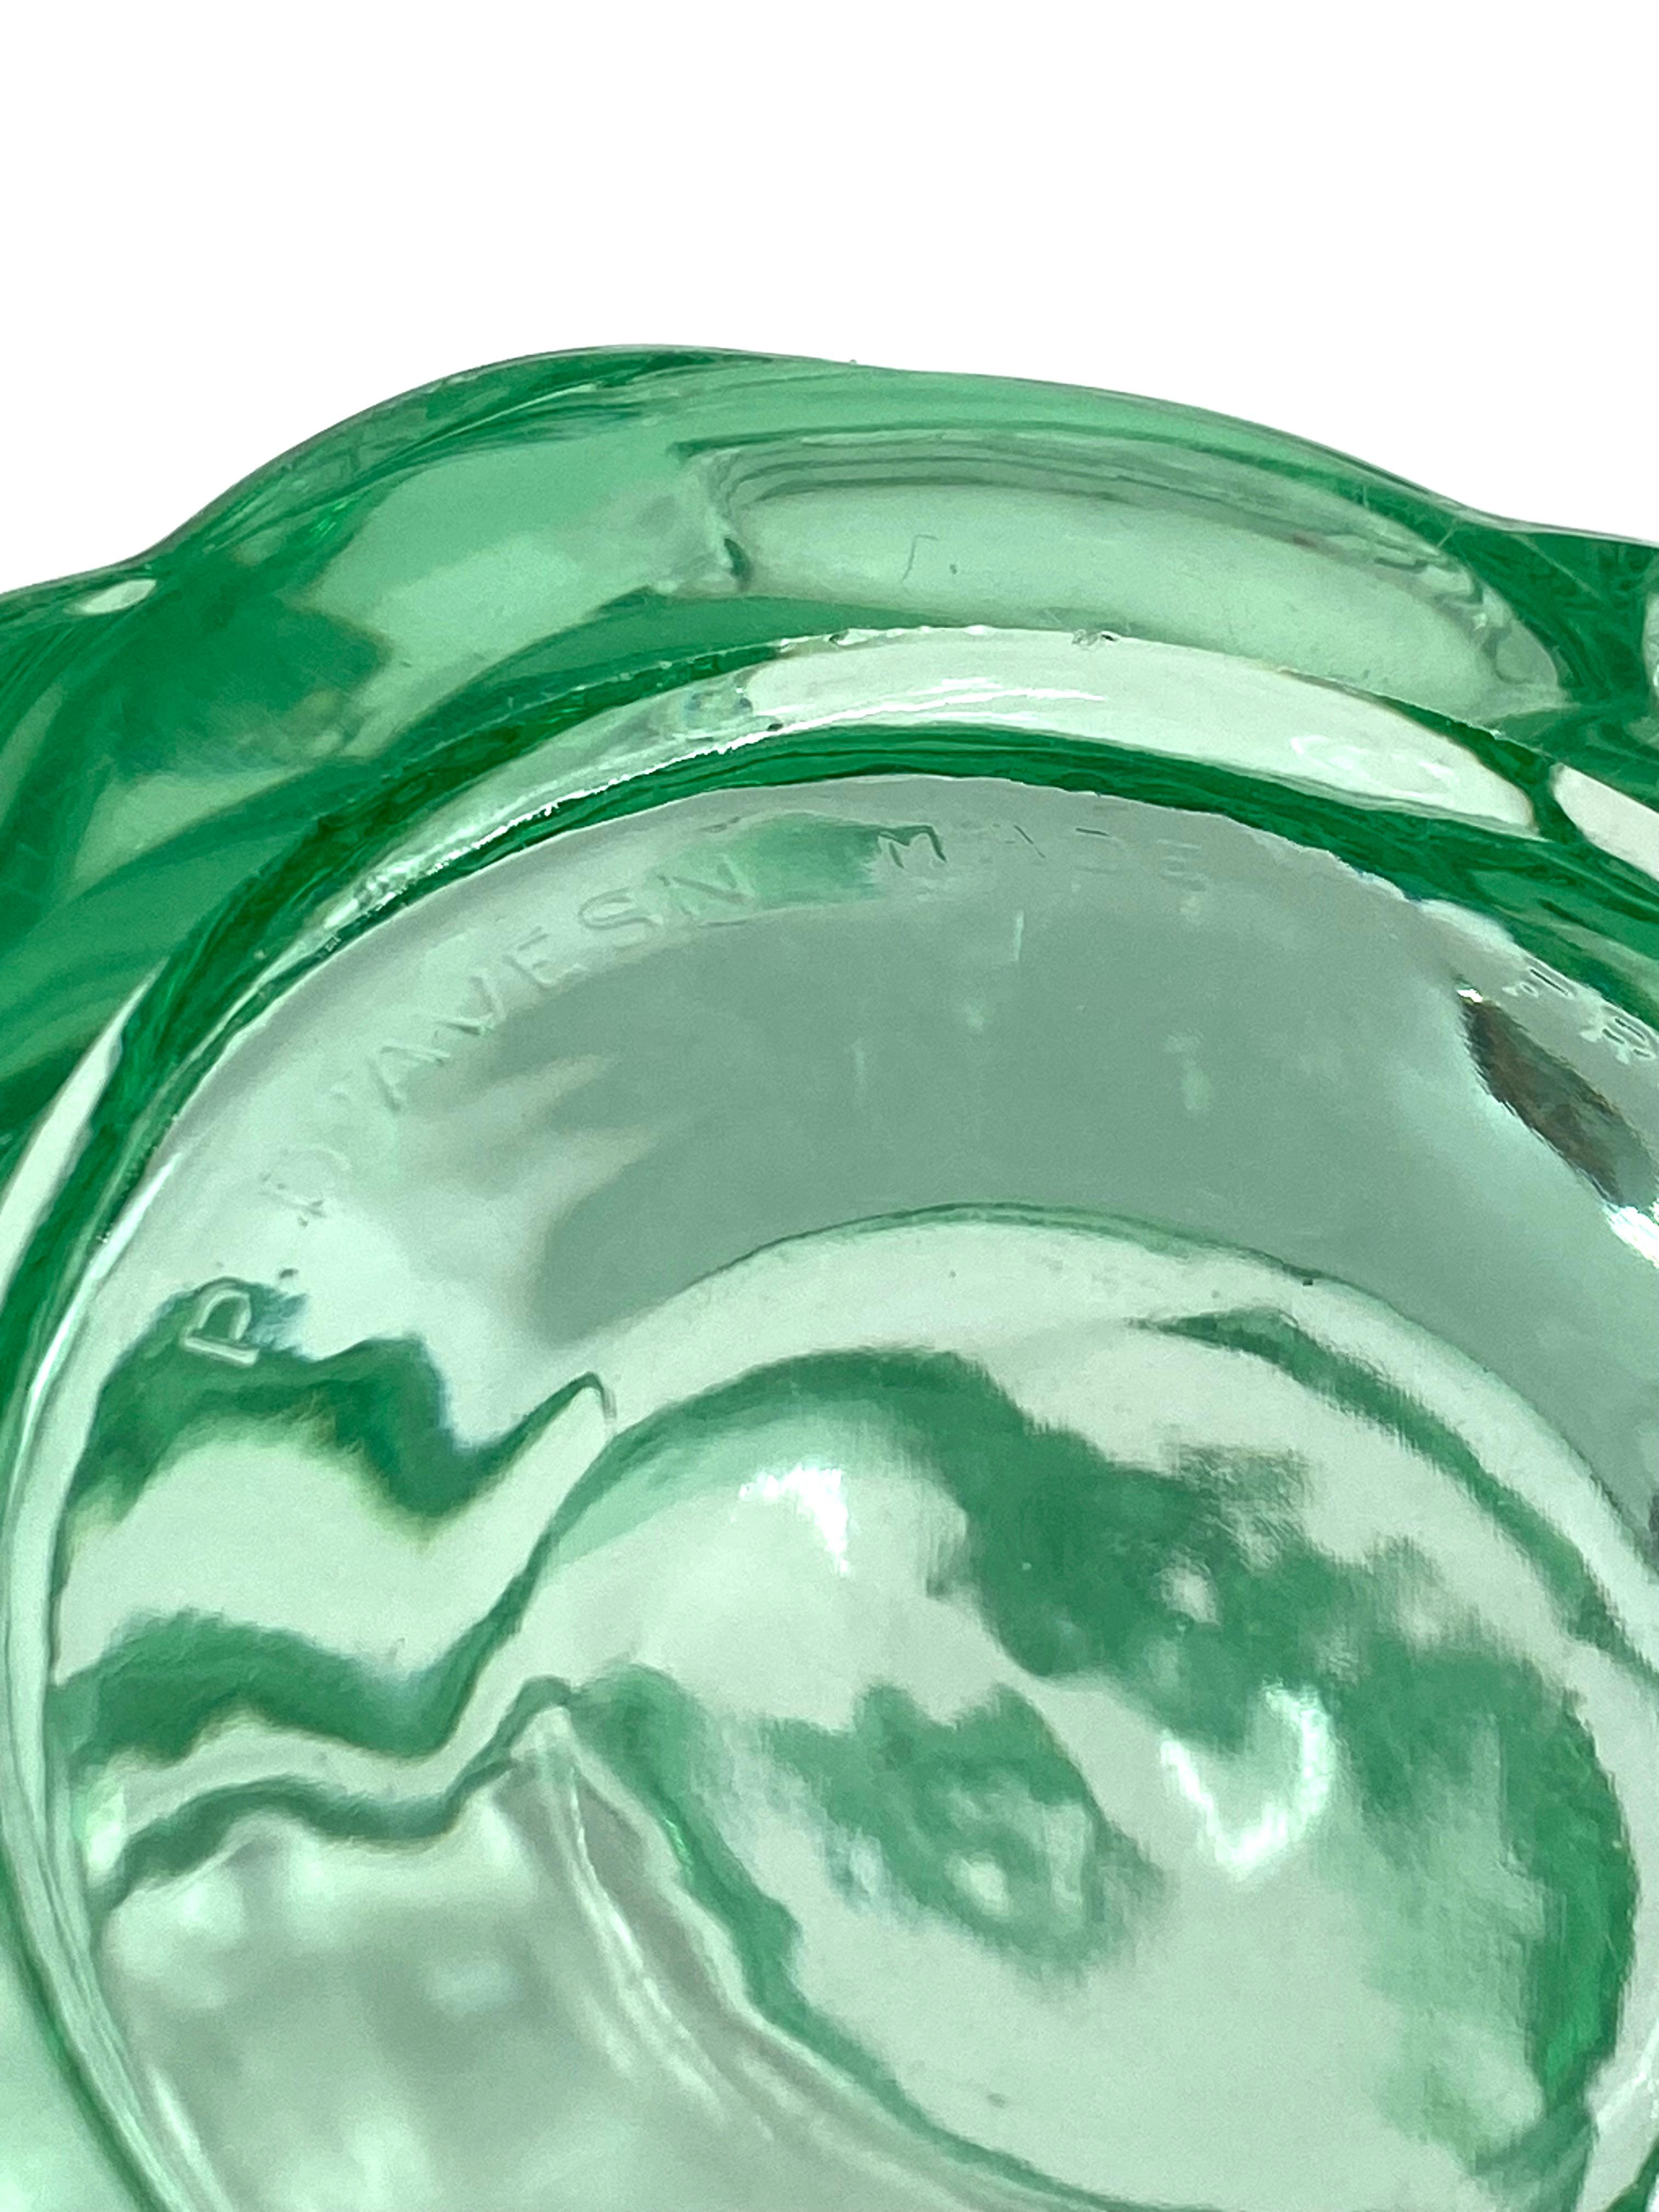 Pierre D'Avesn, Vase en cristal vert d'eau 